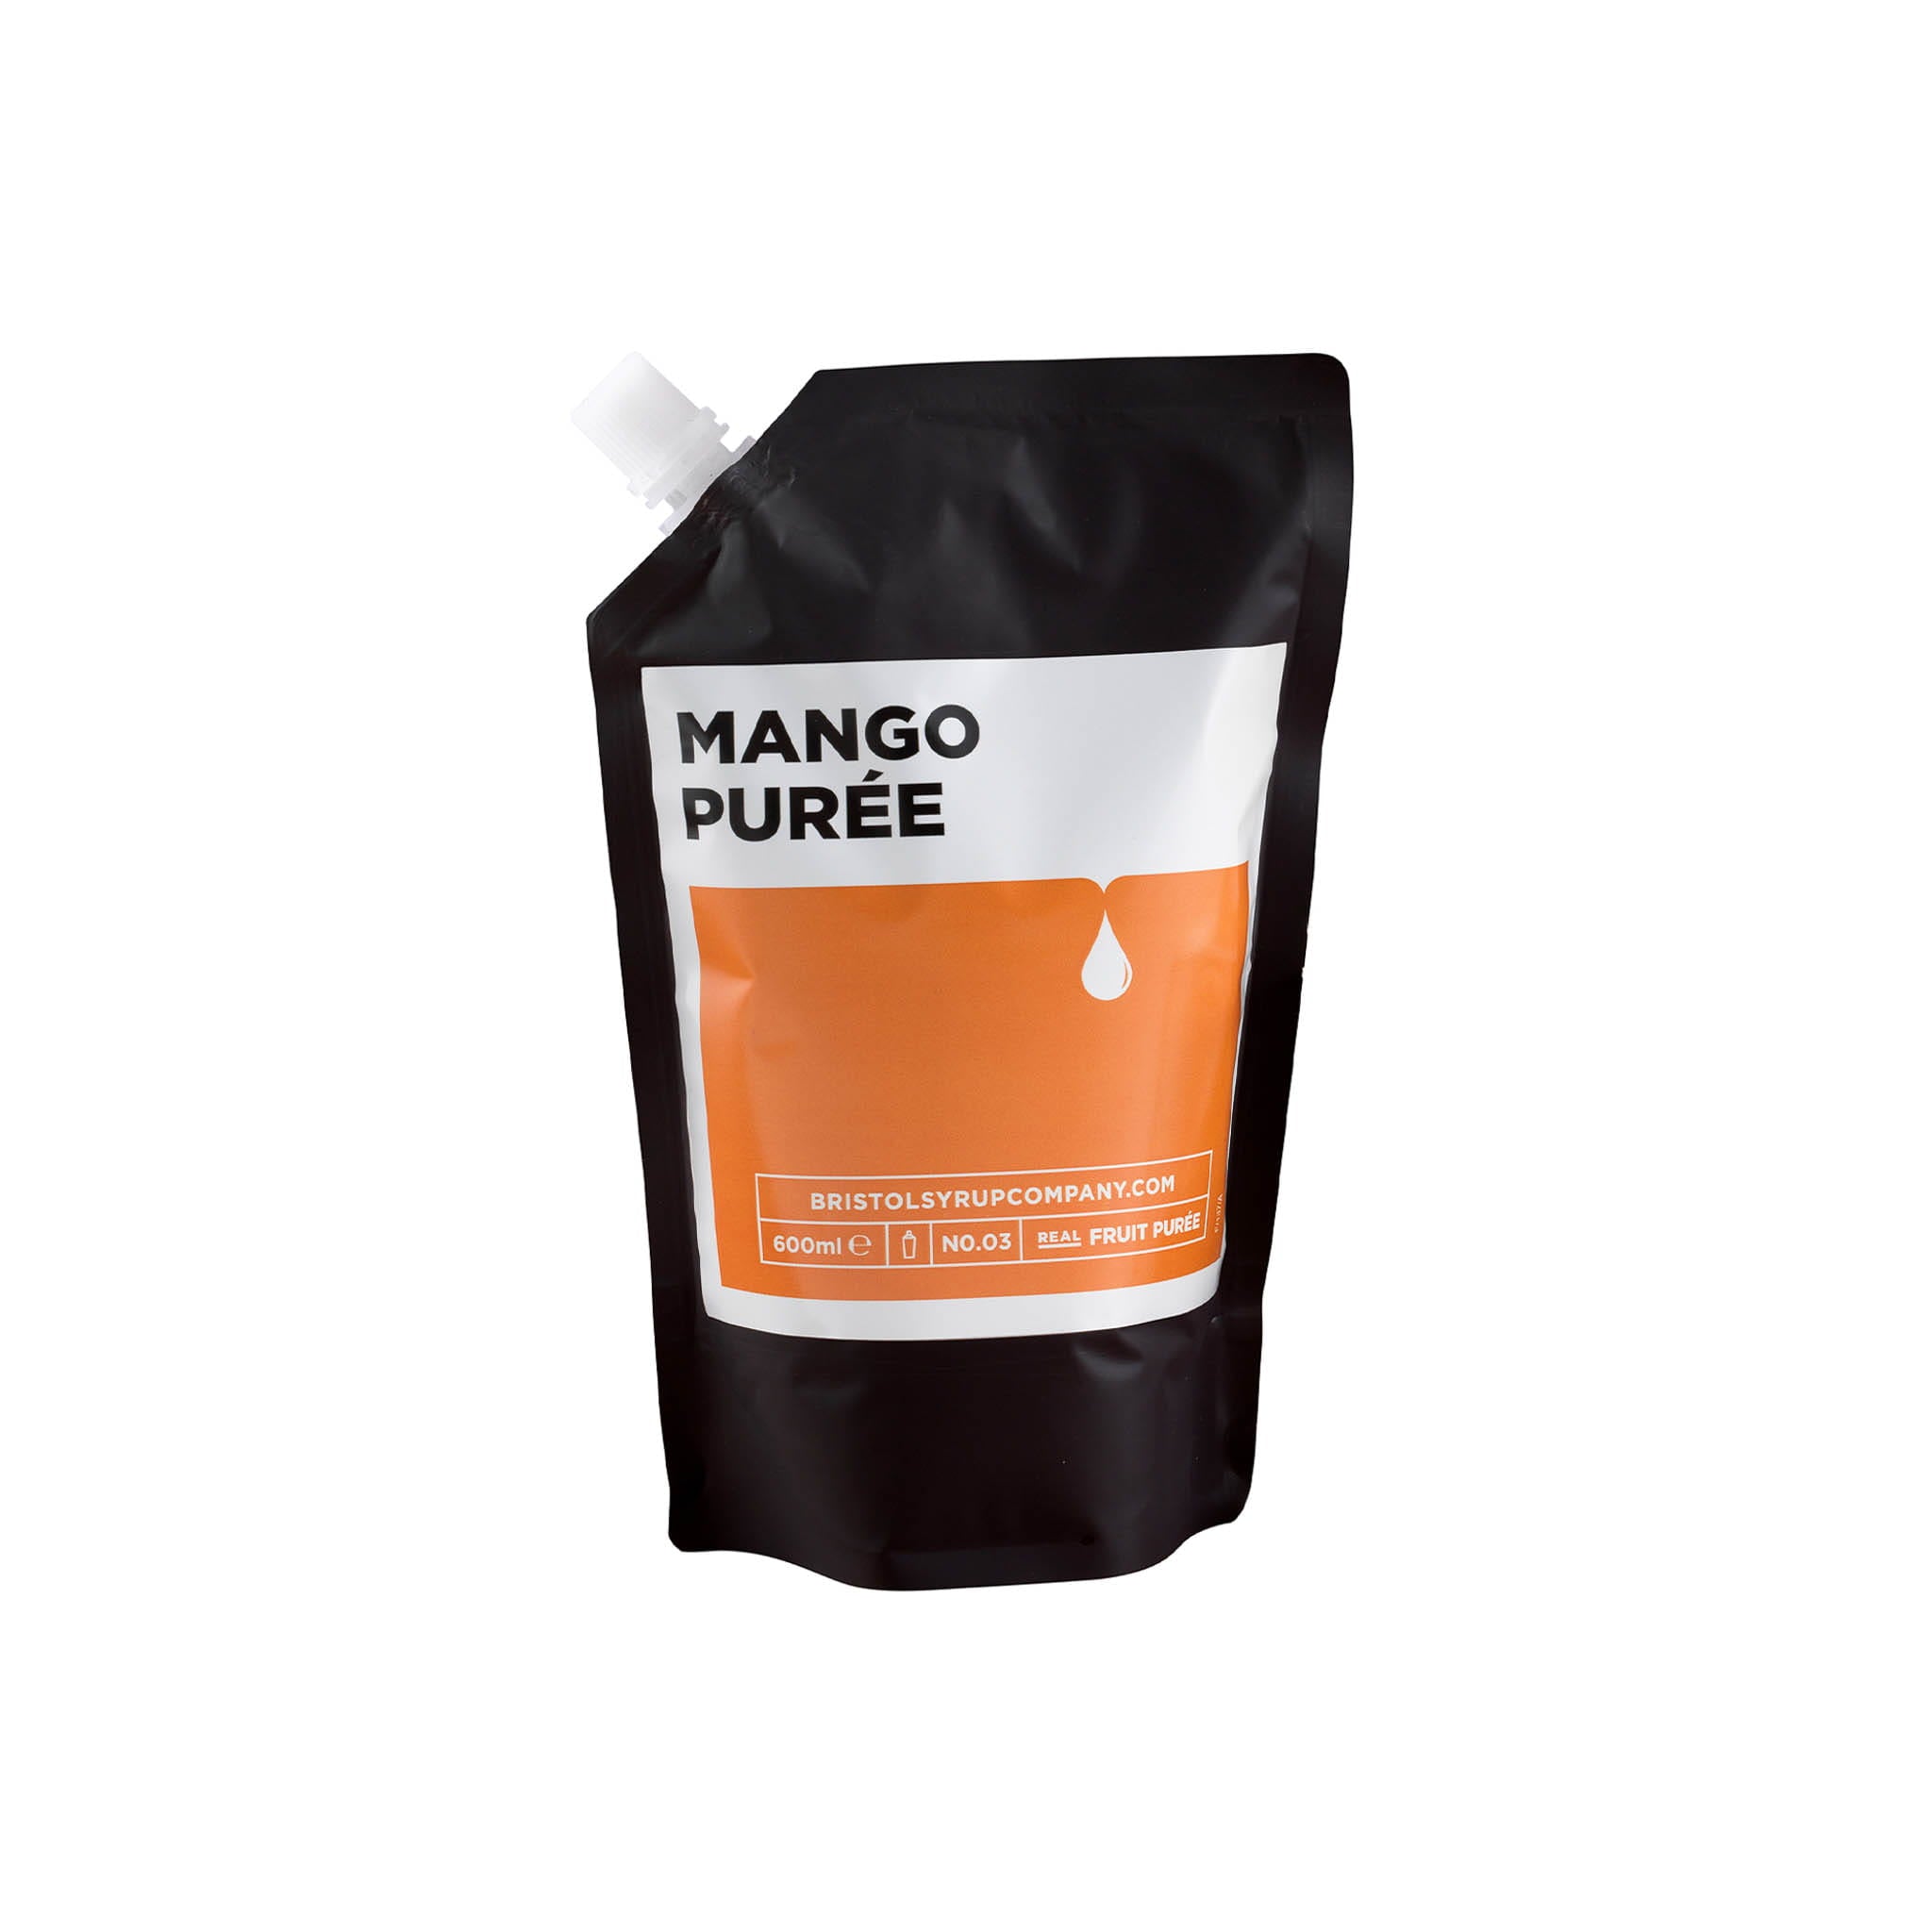 Bristol Syrup Co Mango Puree, 600ml